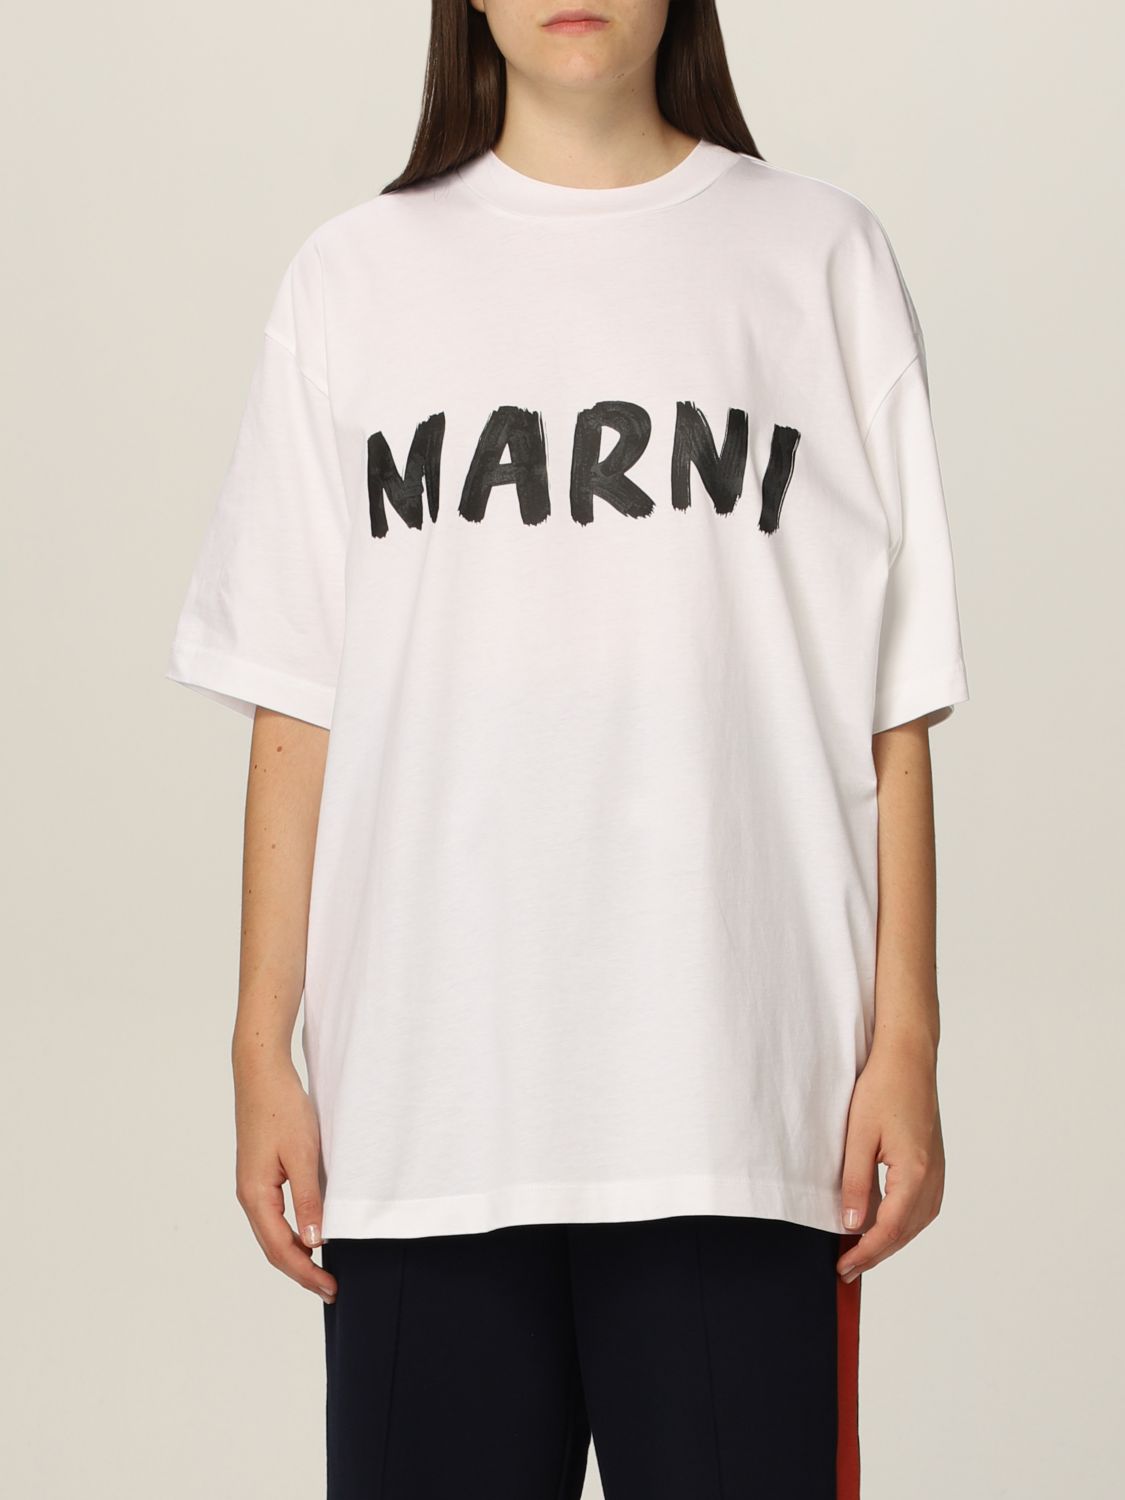 MARNI: cotton t-shirt with logo - White | Marni t-shirt THJET49EPH